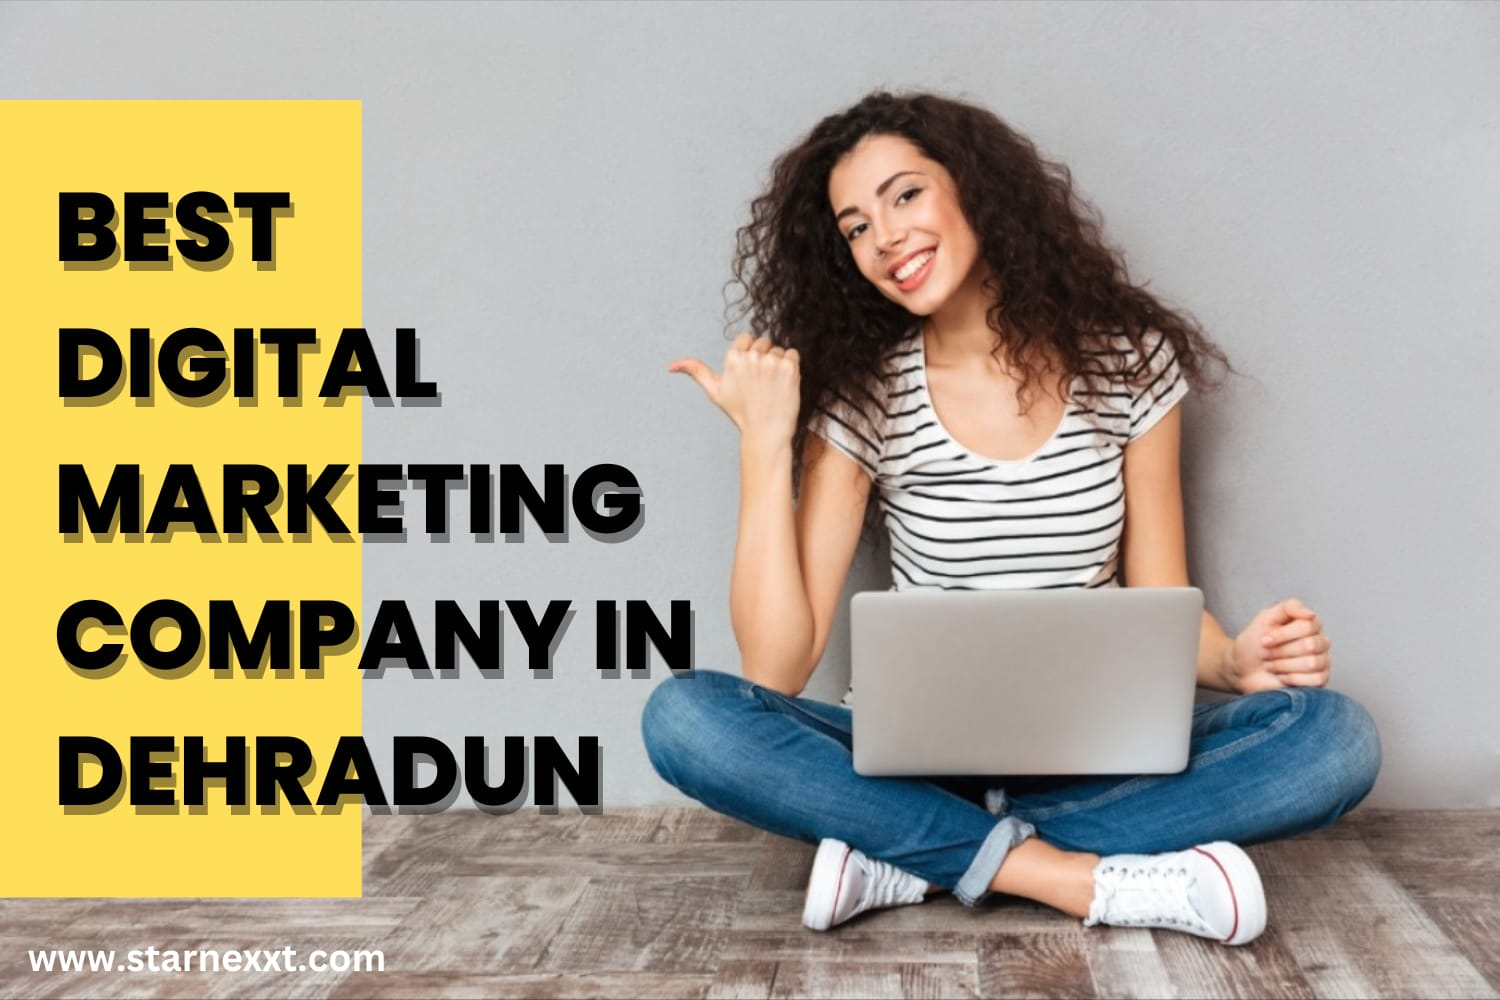 Best Digital Marketing Company In Dehradun 